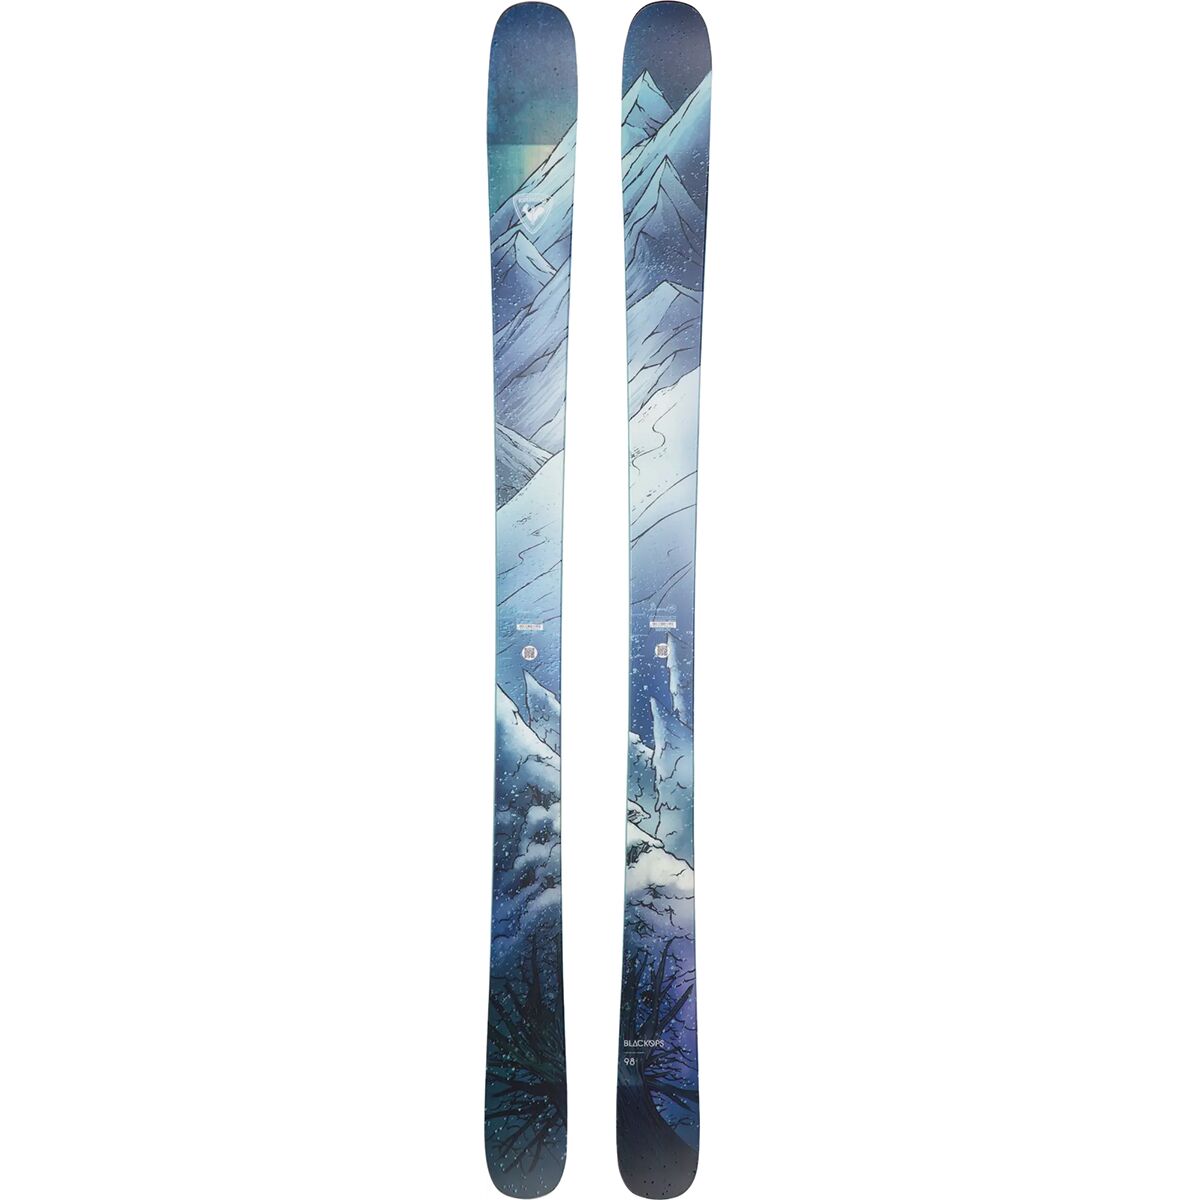 Rossignol Blackops 98 Ski - Women's